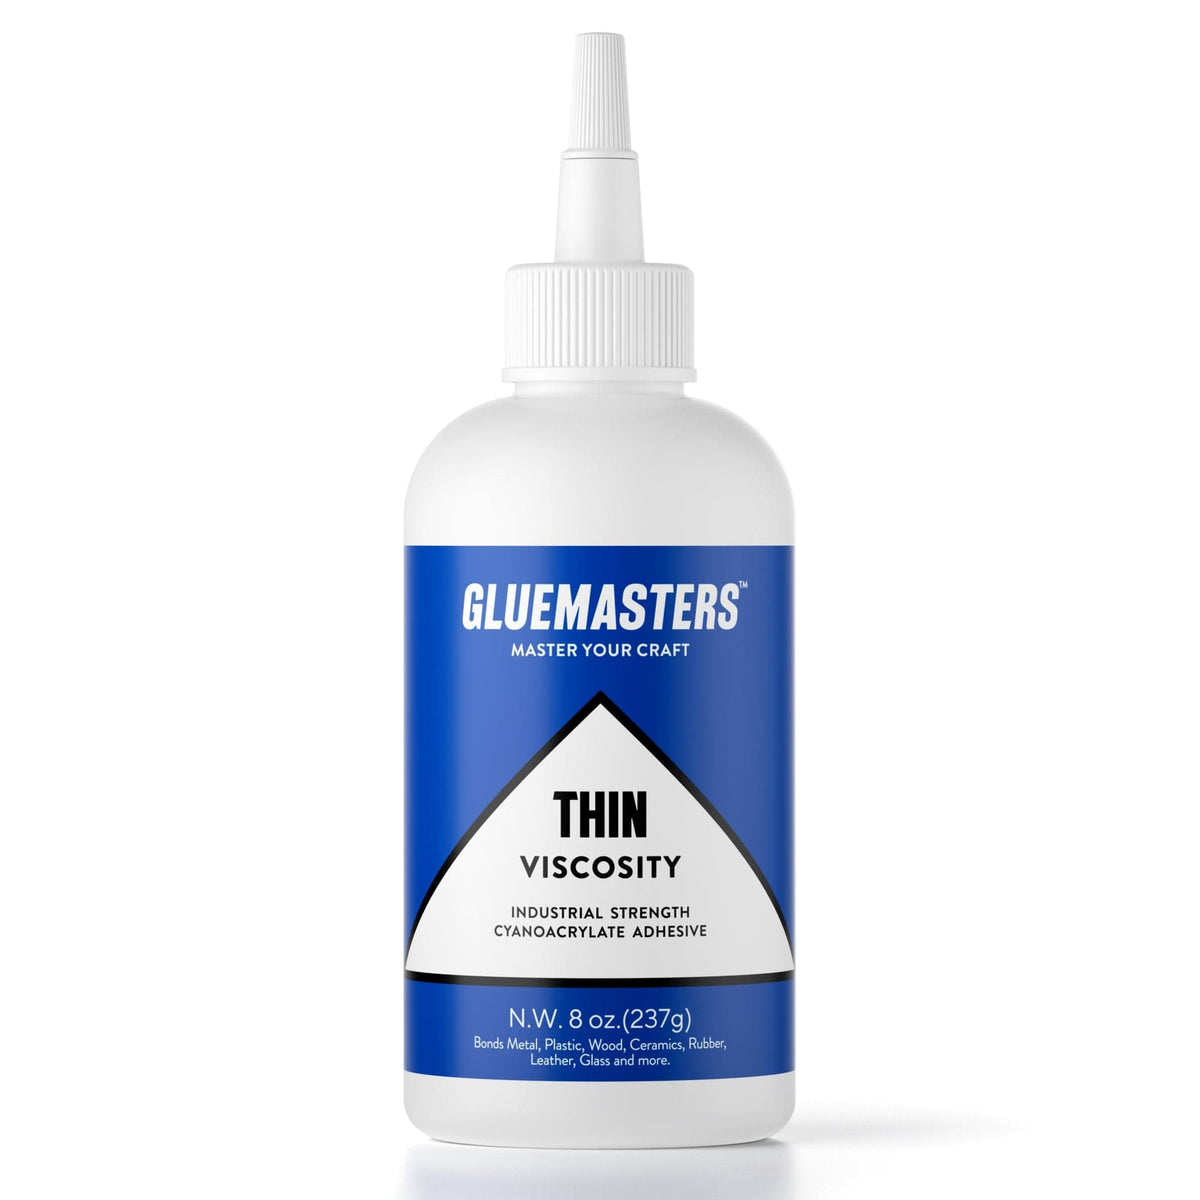 gluemasters.com